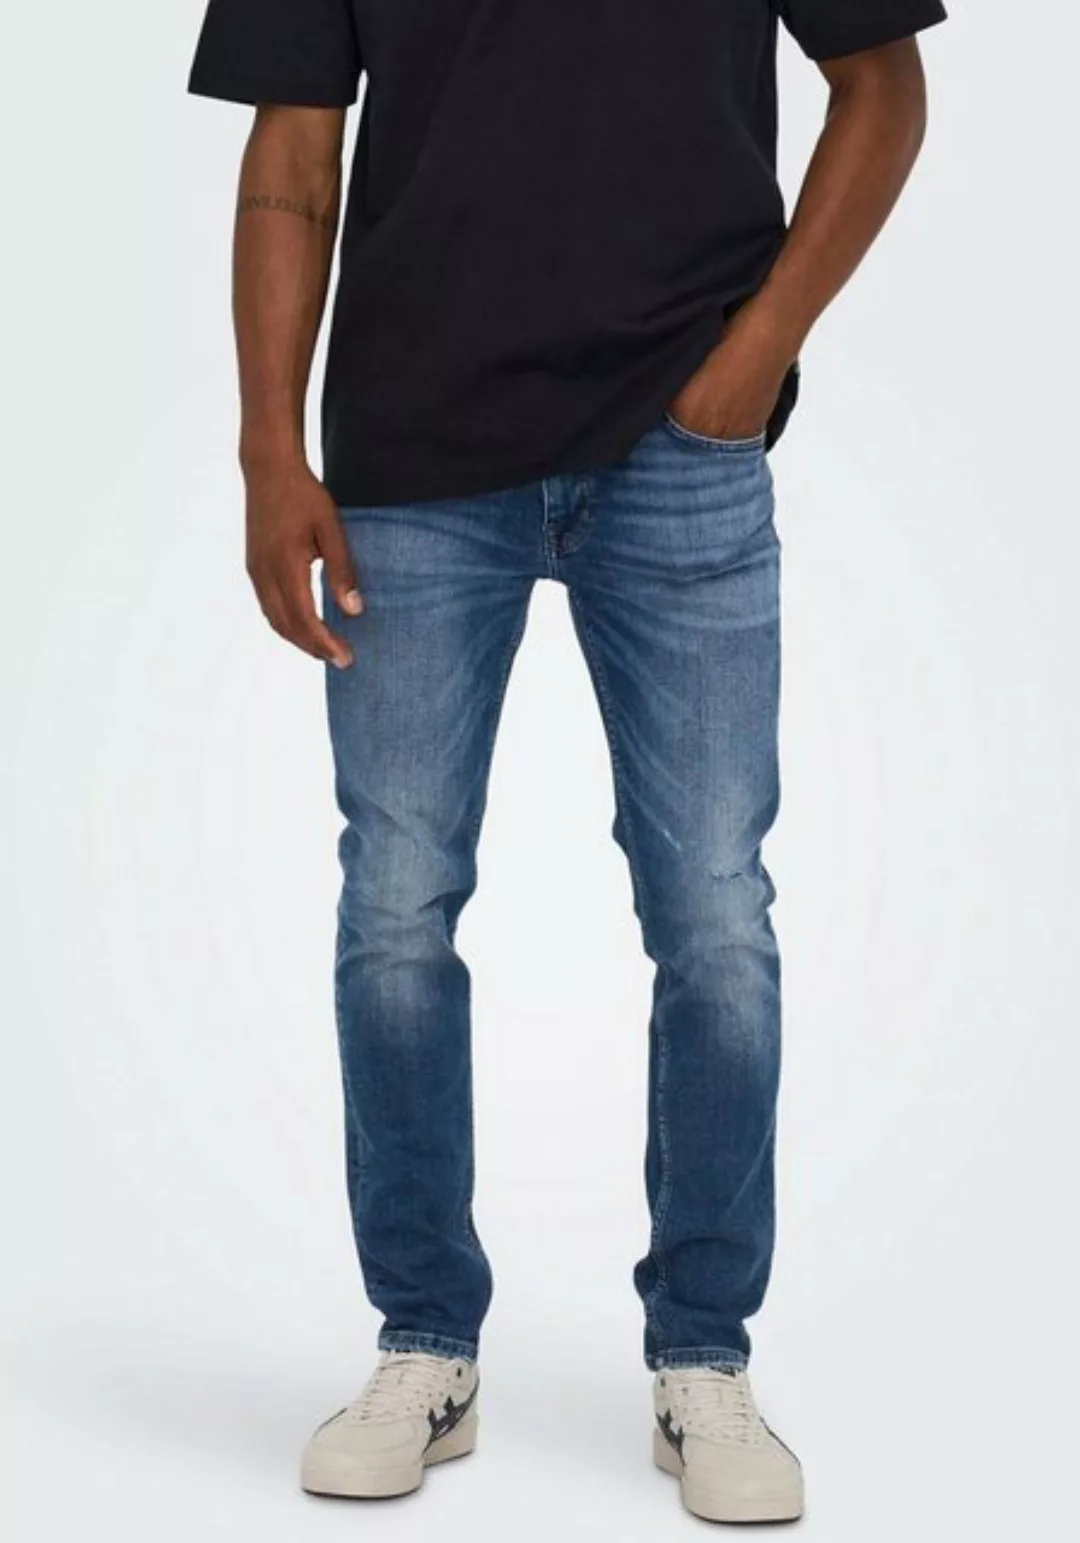 Only & Sons Herren Jeans ONSLOOM SLIM 3292 - Slim Fit - Blau - Blue Denim günstig online kaufen